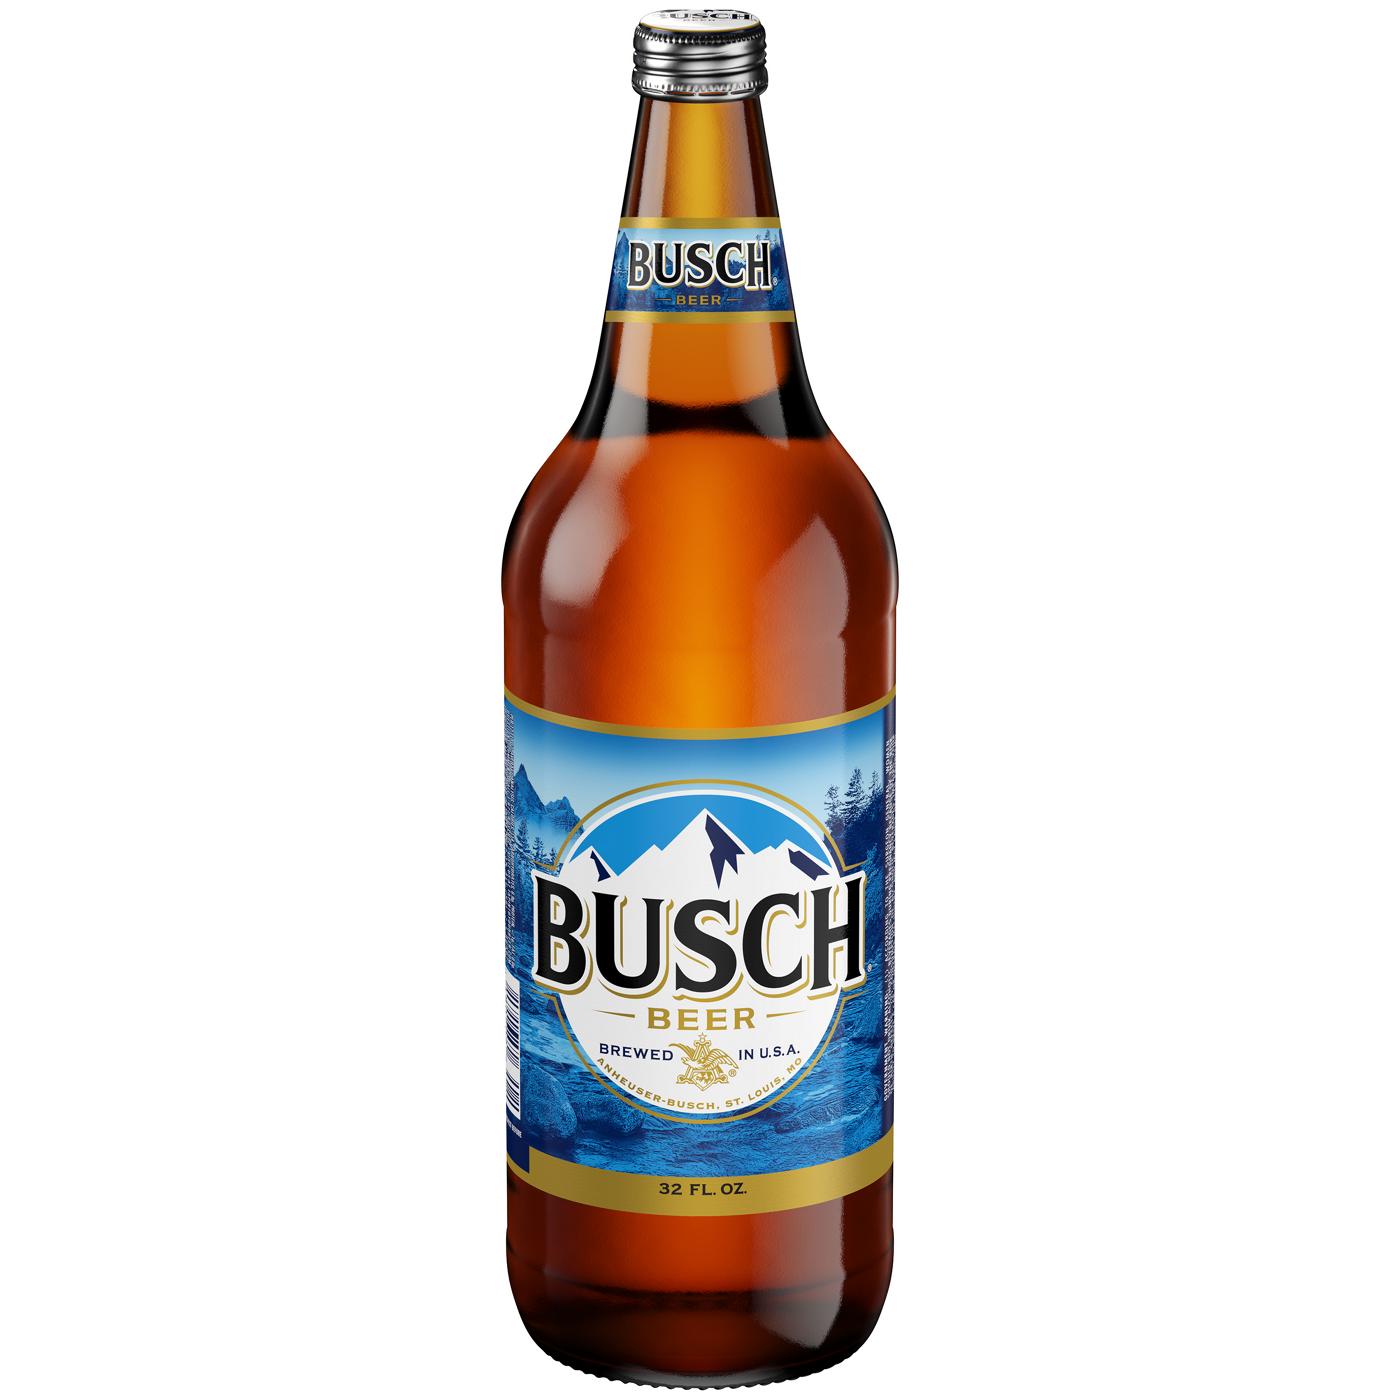 Busch Beer Bottle; image 1 of 2